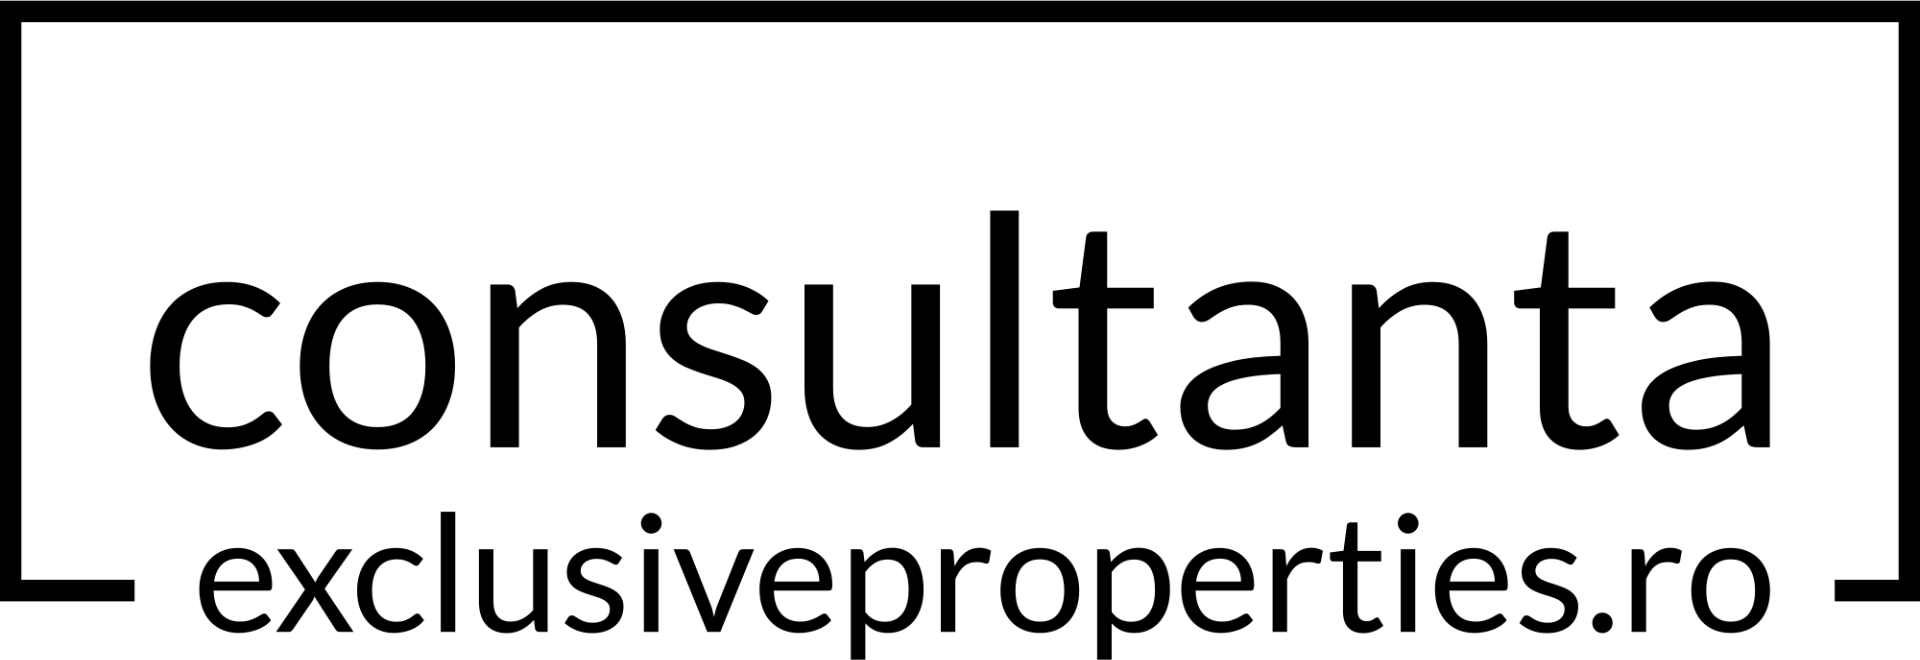 consultanta-high-resolution-logo-black-transparent